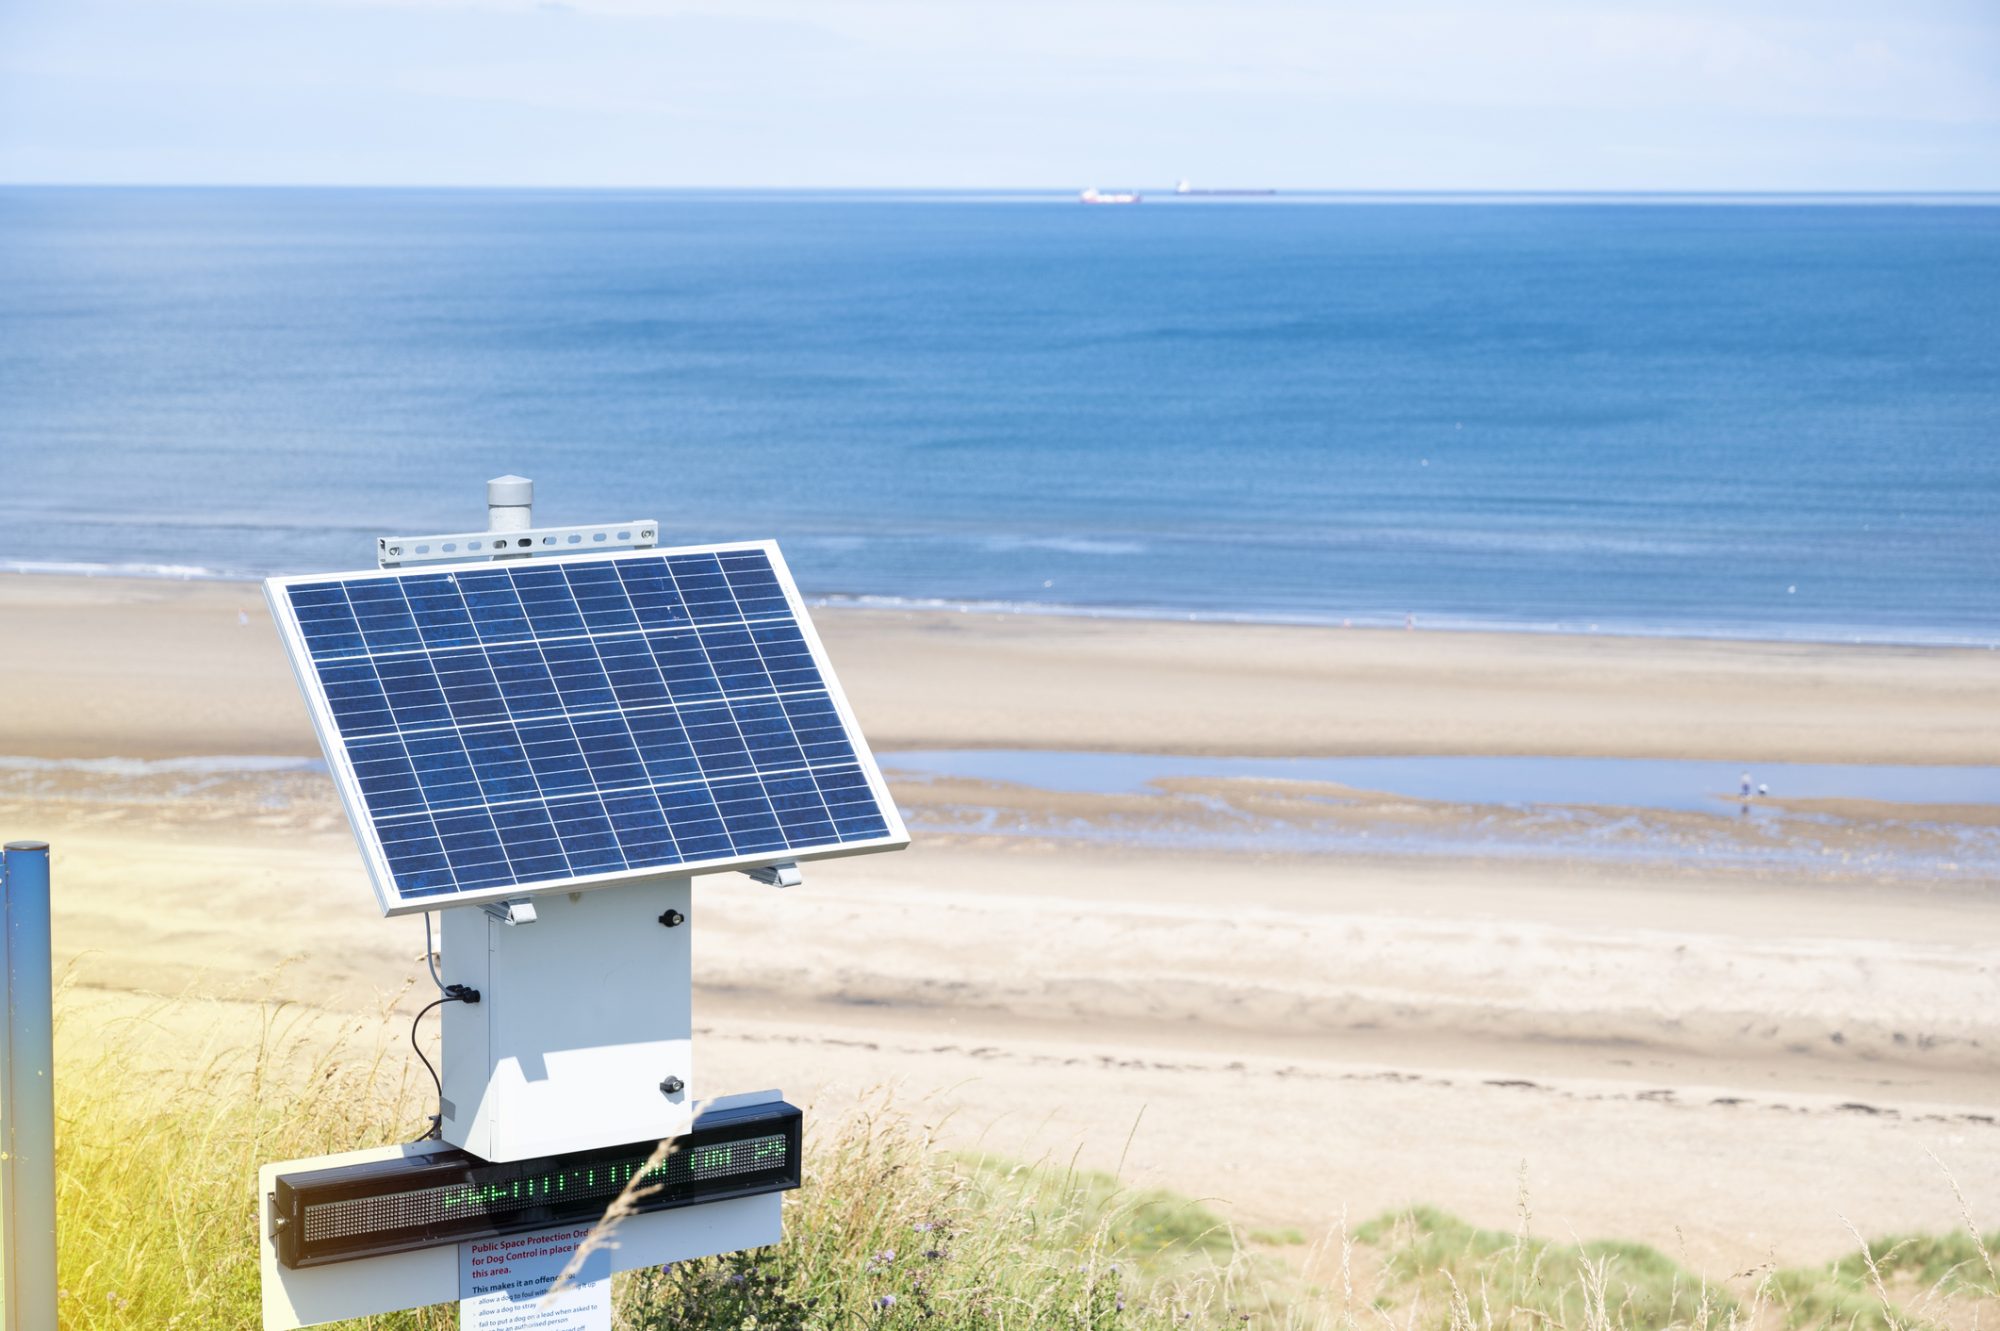 Crimdon beach, Hartlepool and Seaton Carew, England. 28 July, 2021. Solar panel on the beach